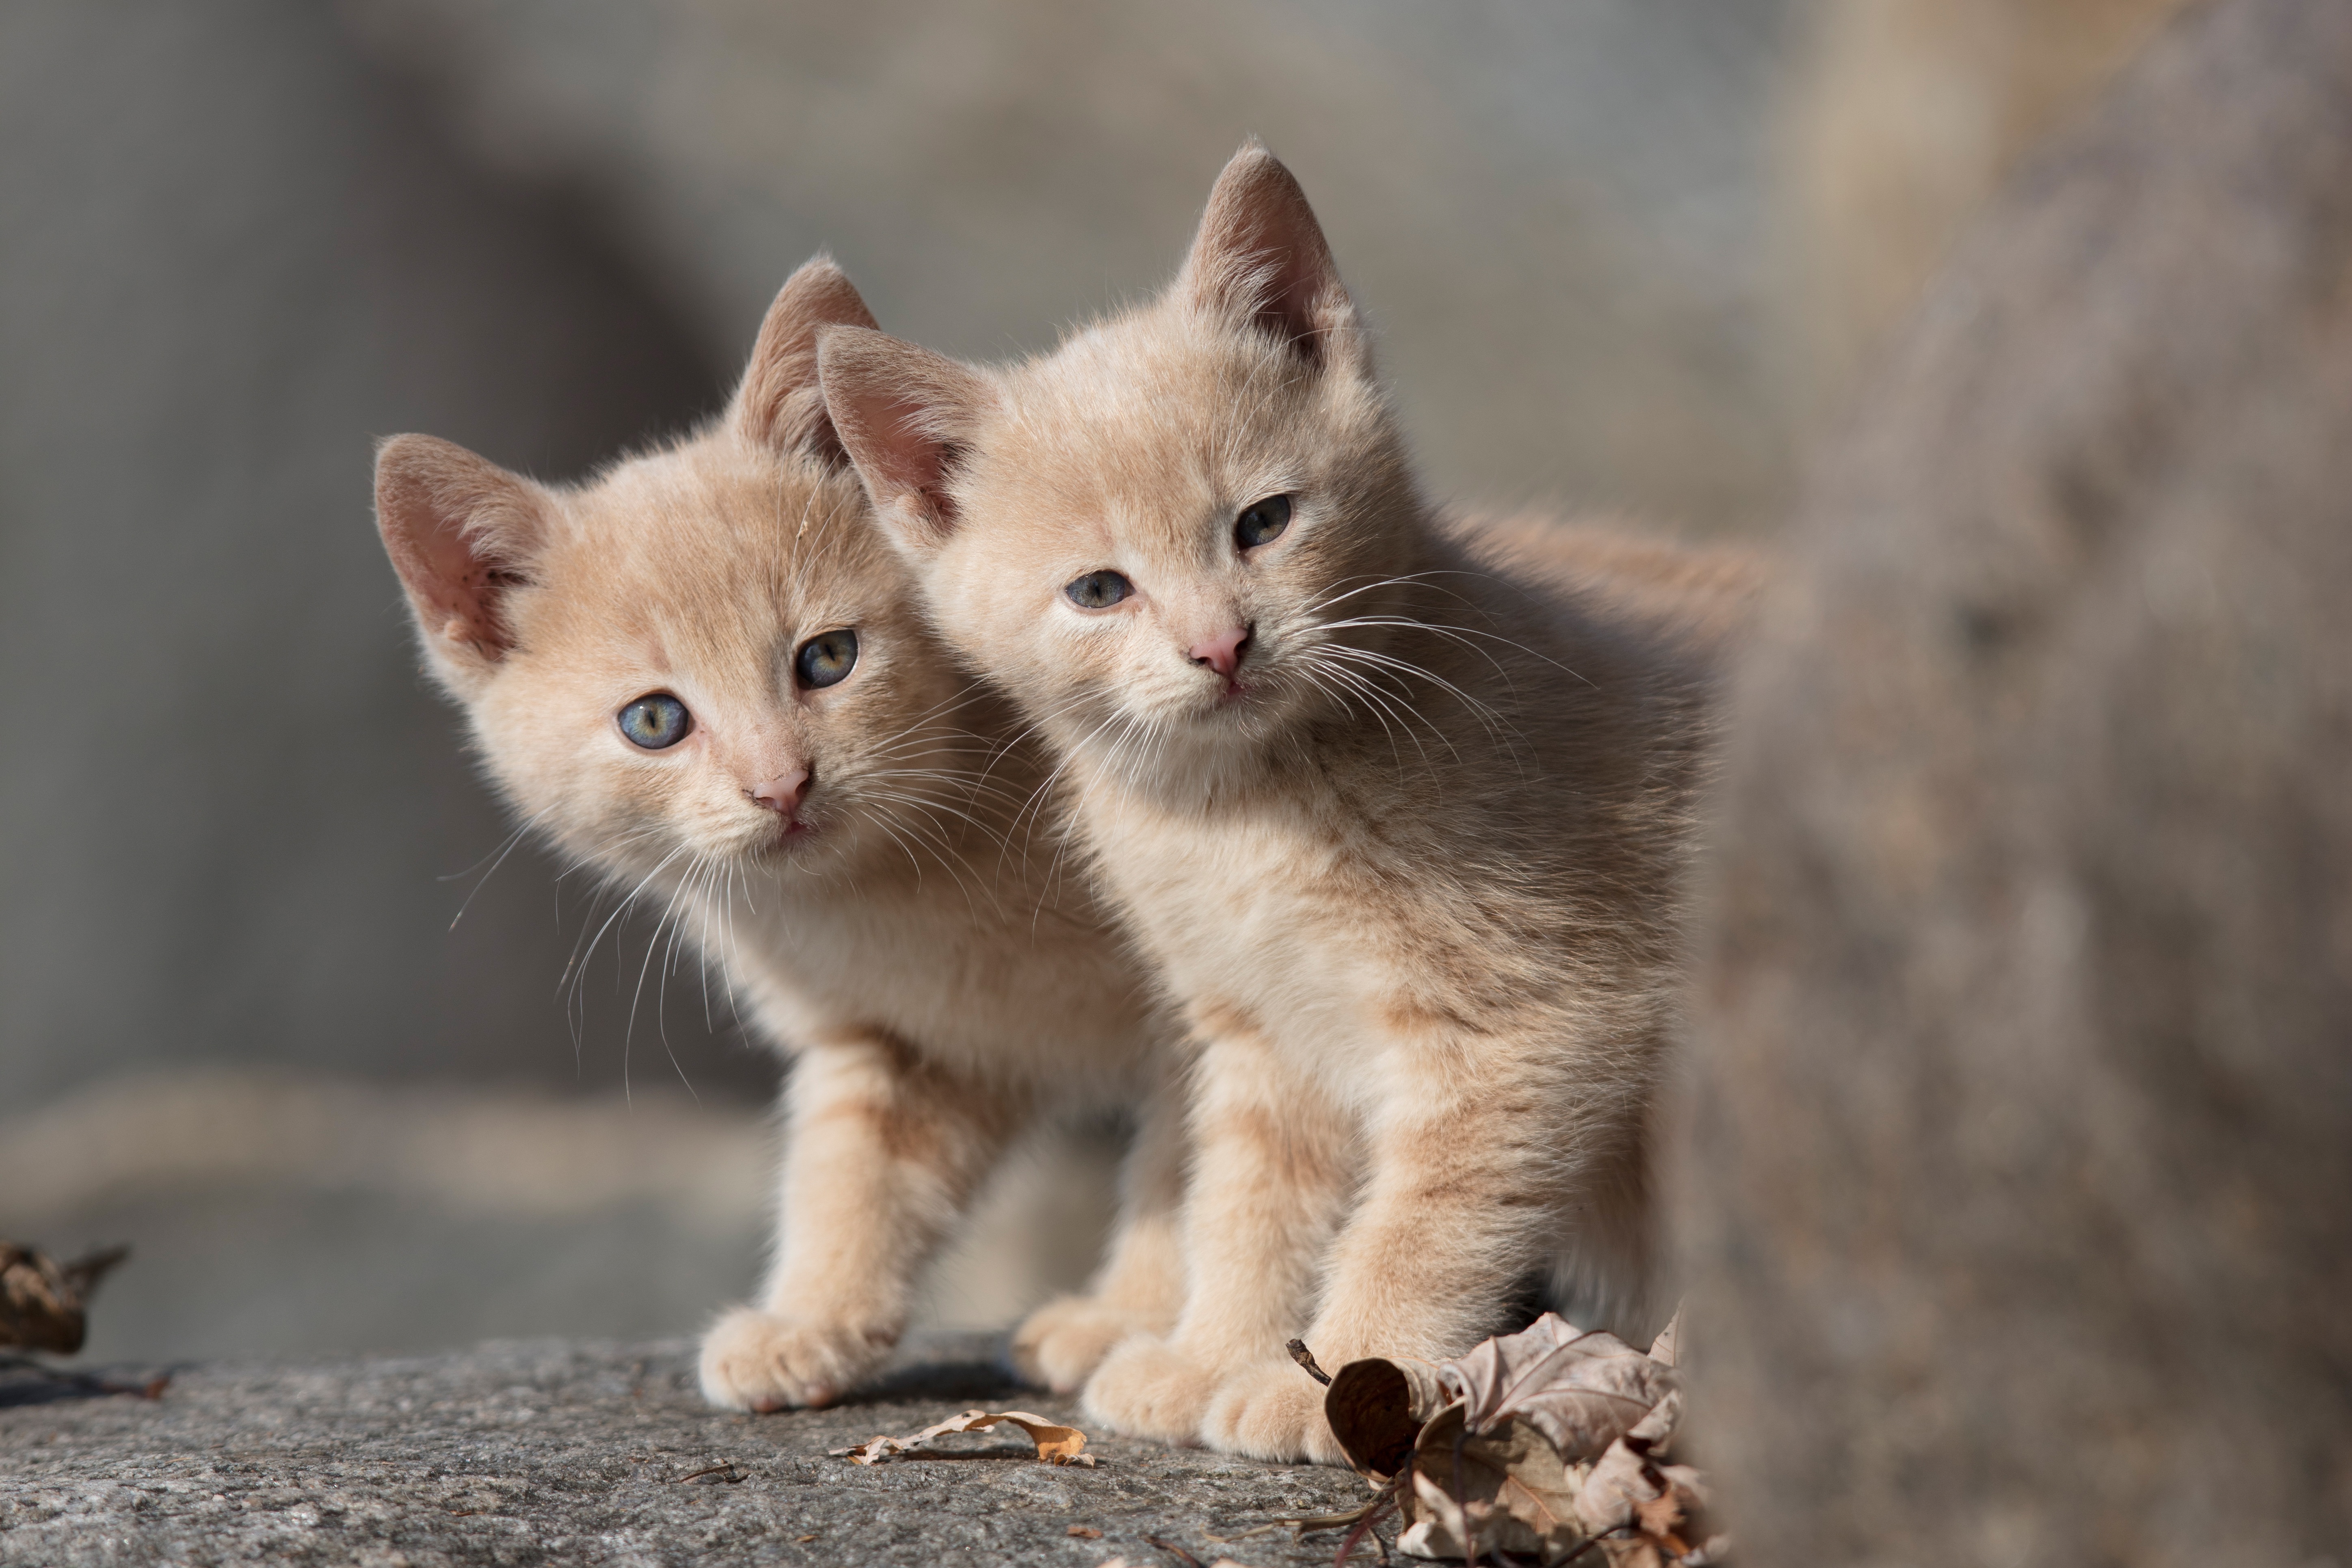 Baby Animal Cat Kitten Pet 5792x3861